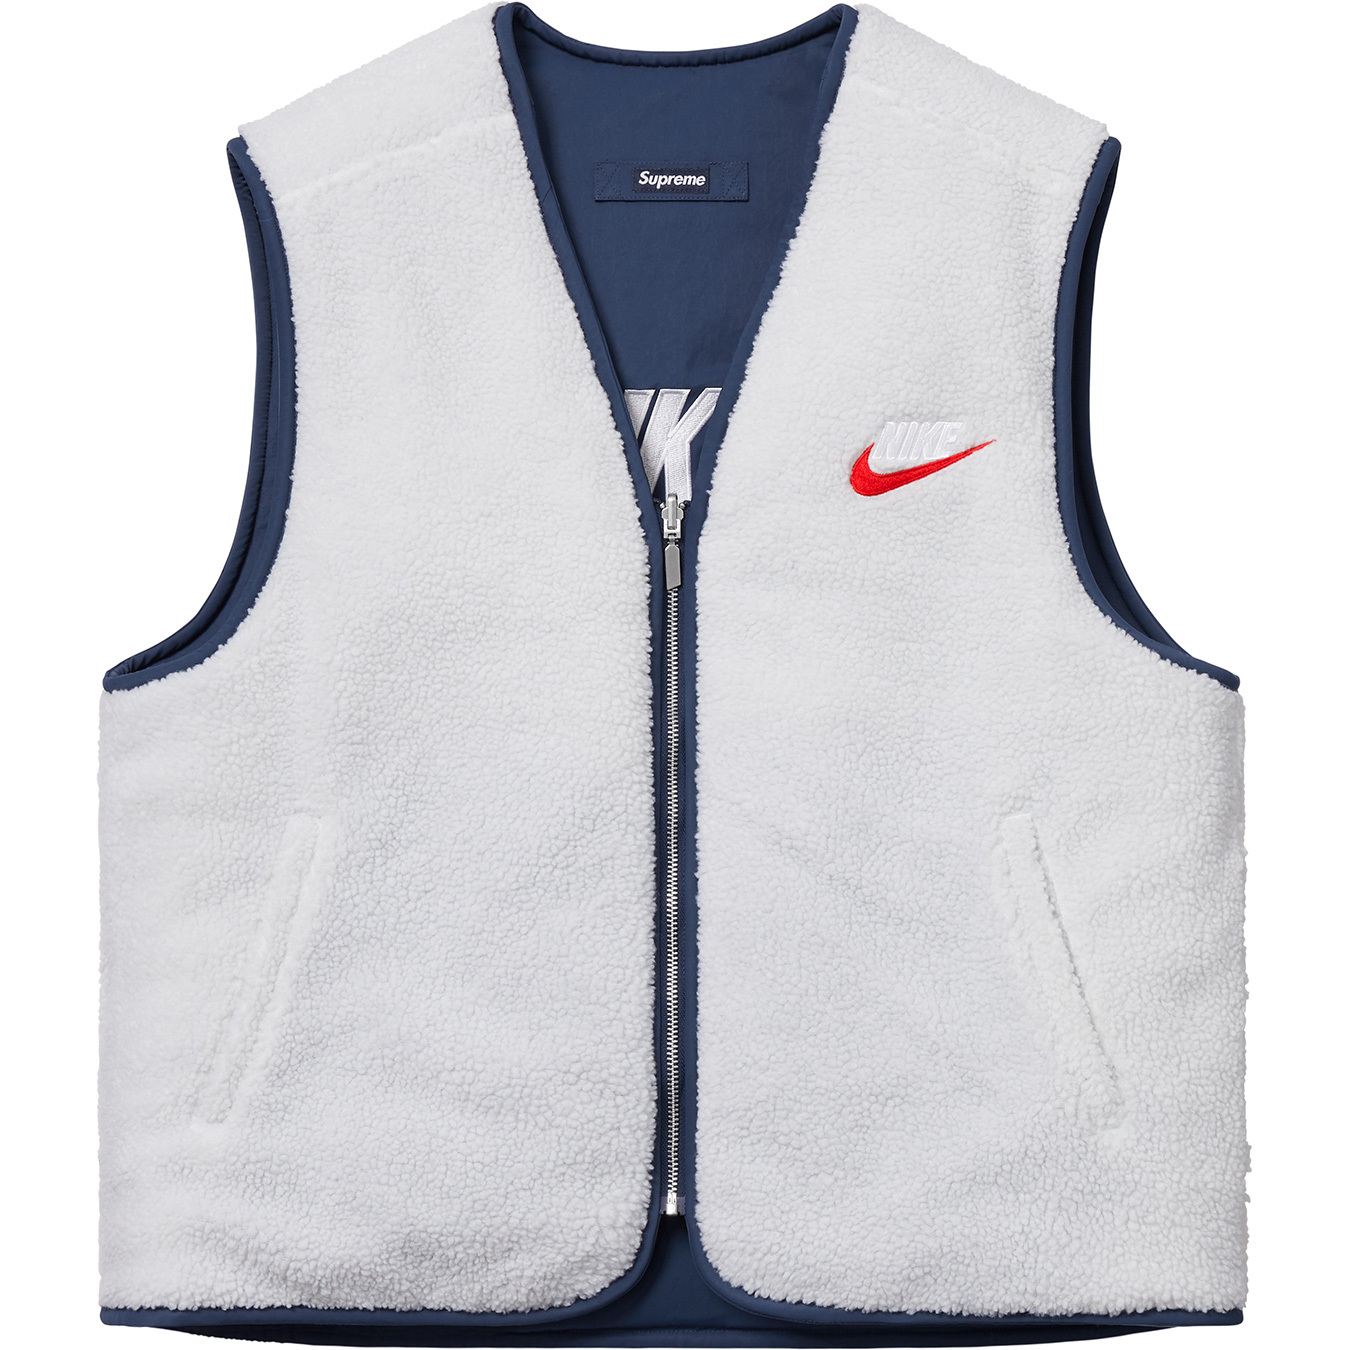 Supreme®/Nike® Reversible Nylon Sherpa Vest - Supreme Community